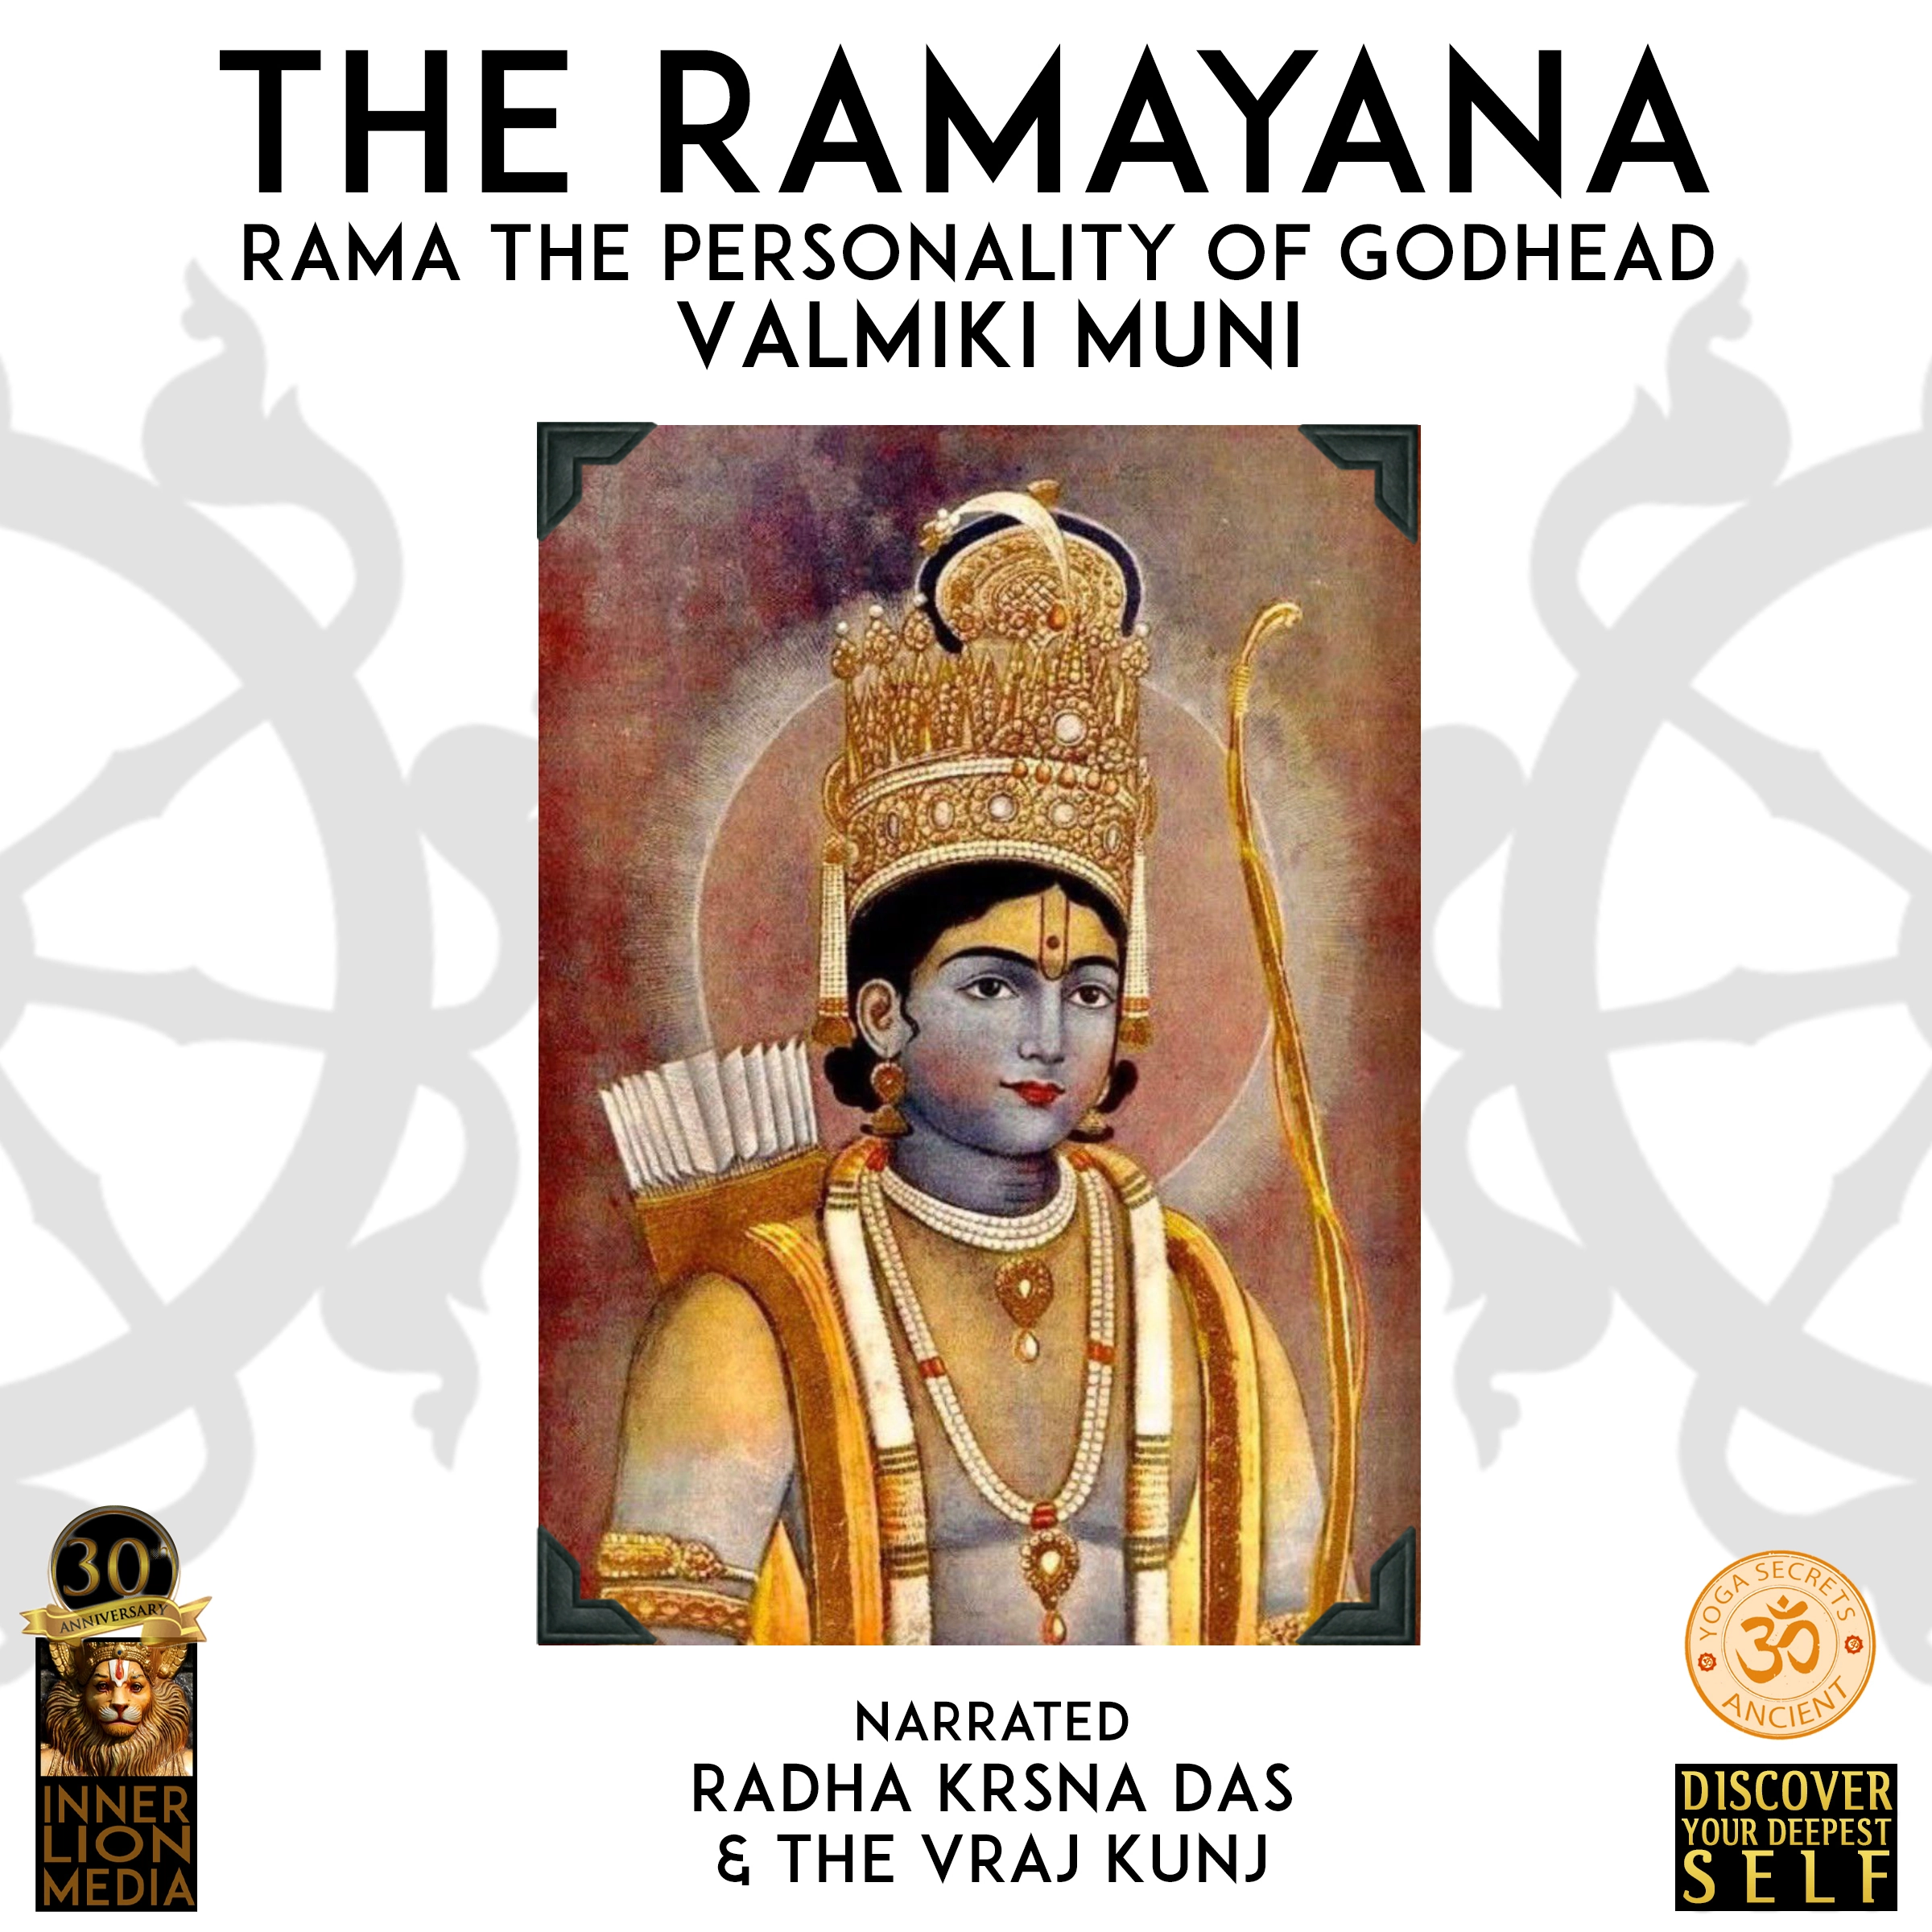 The Ramayana by Valmiki Muni Audiobook